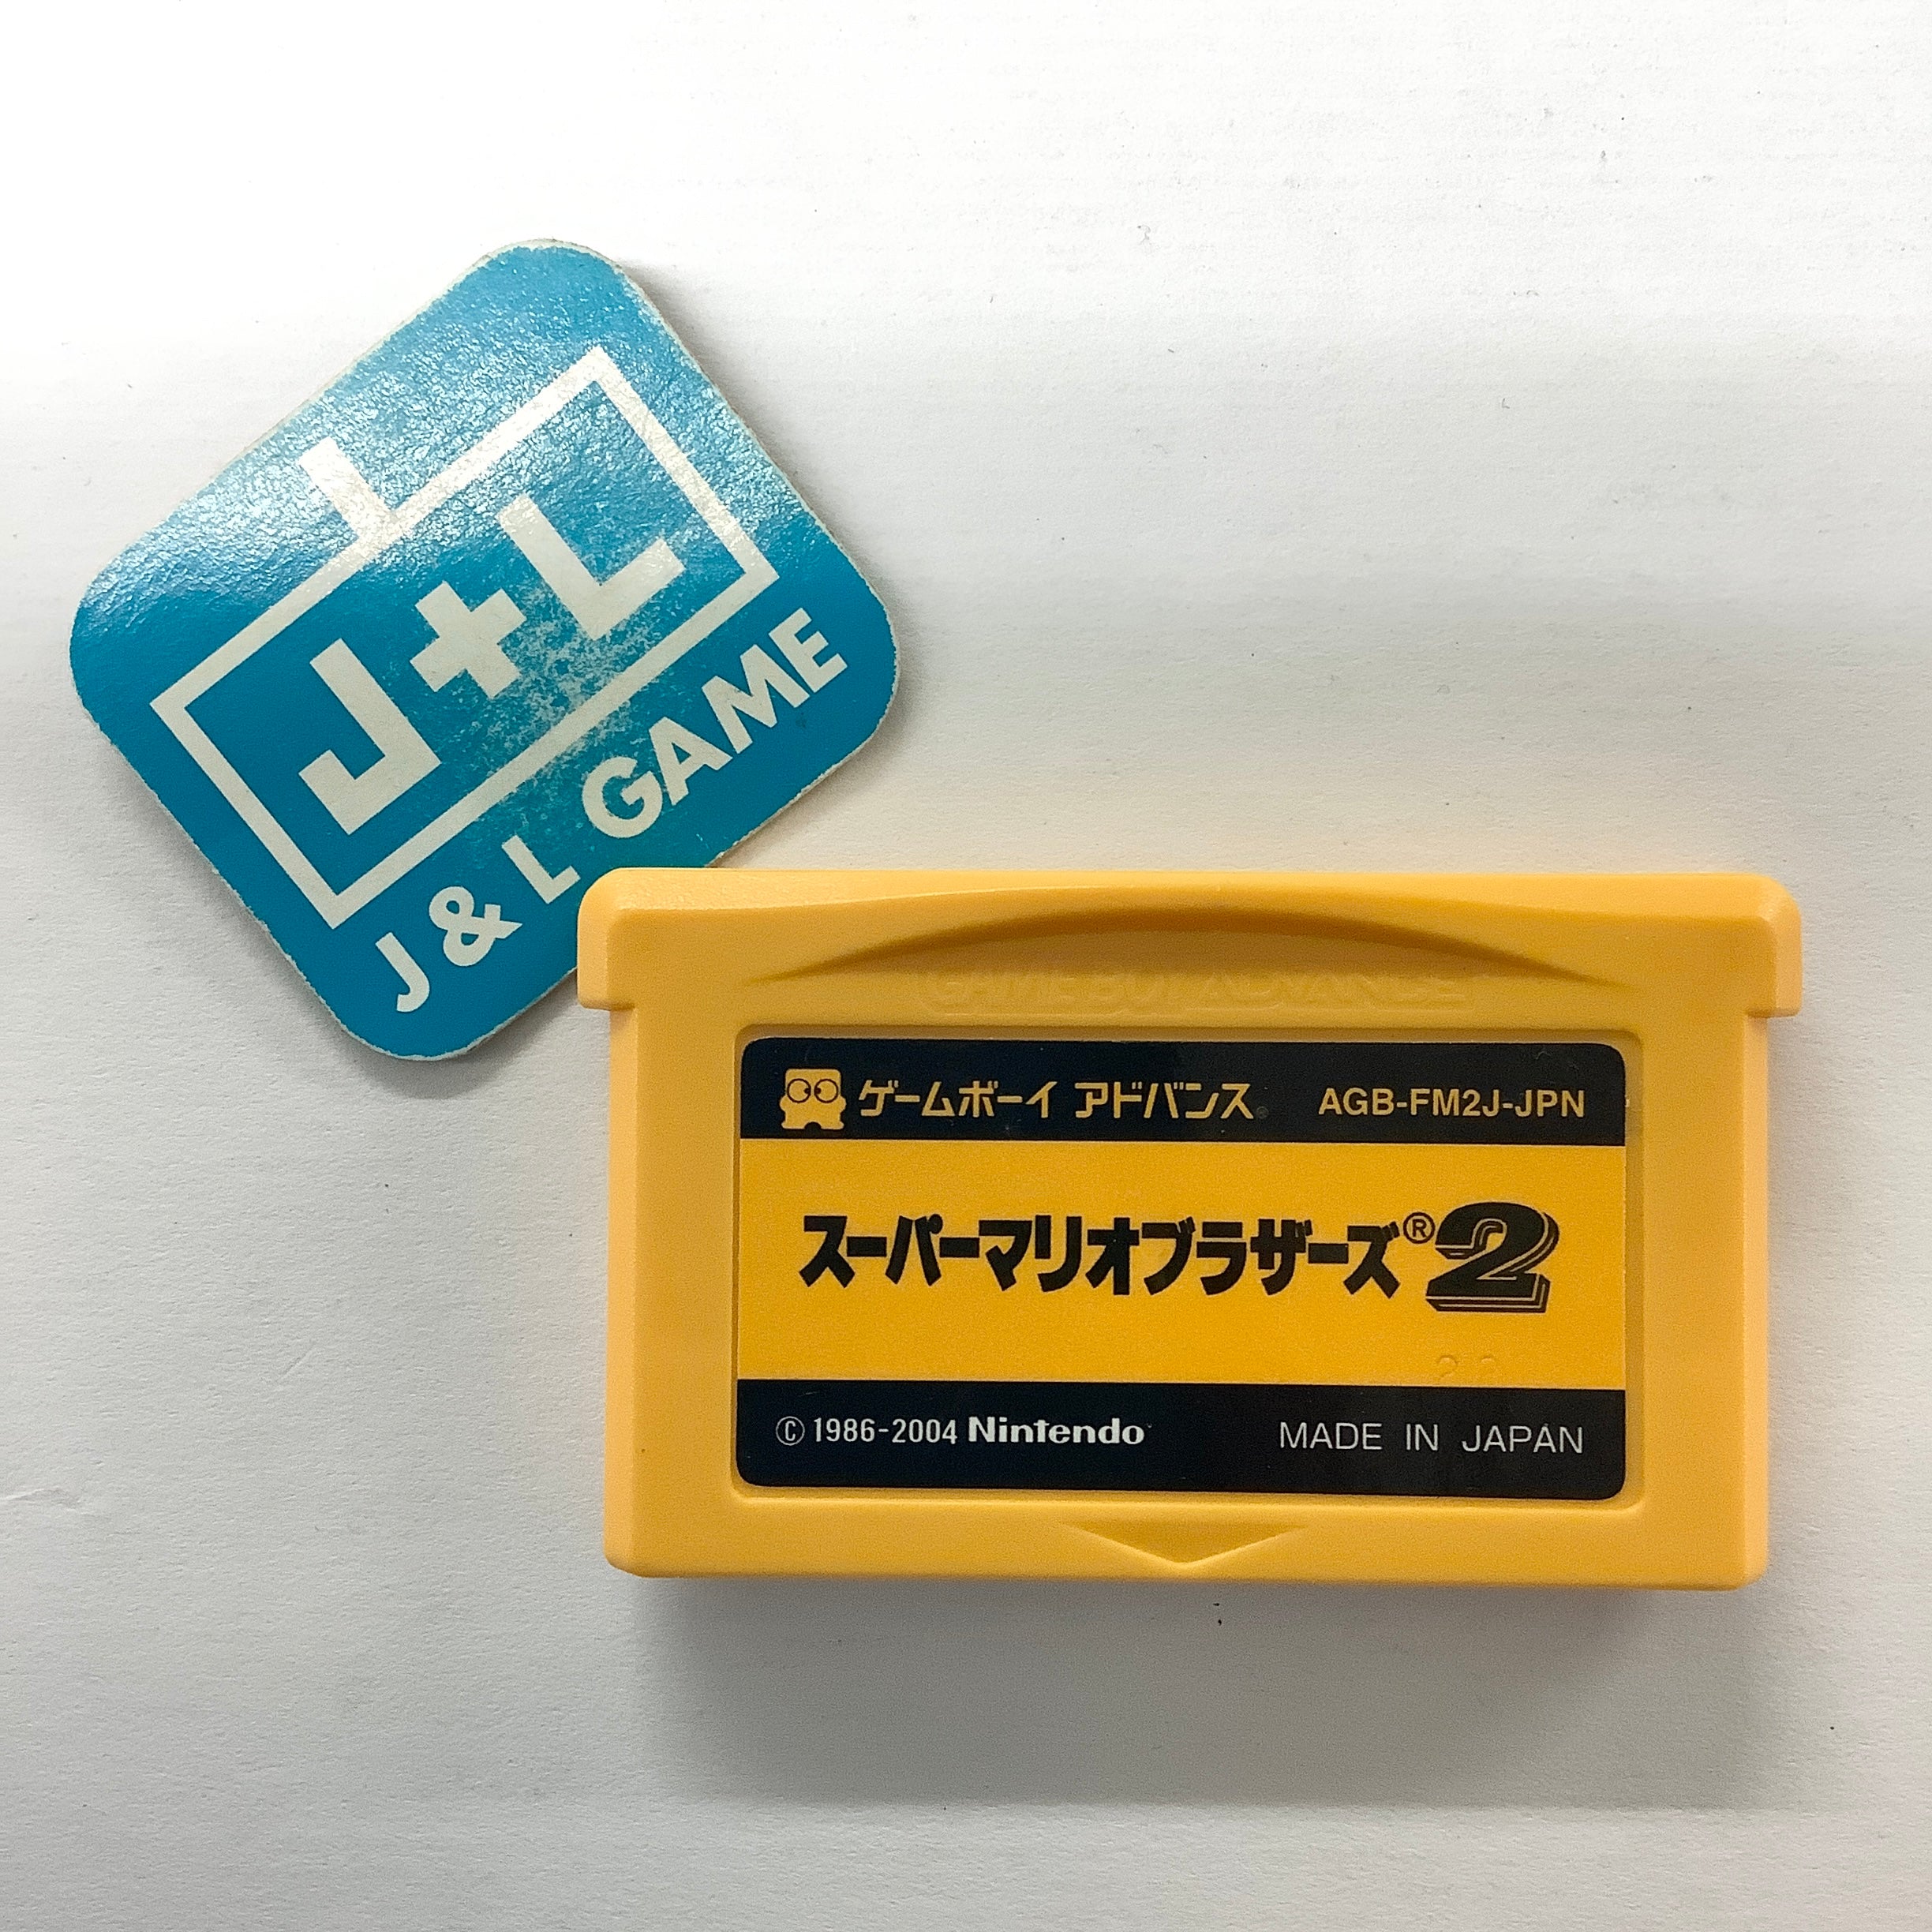 Famicom Mini: Super Mario Bros. 2 - (GBA) Game Boy Advance [Pre-Owned] (Japanese Import) Video Games Nintendo   